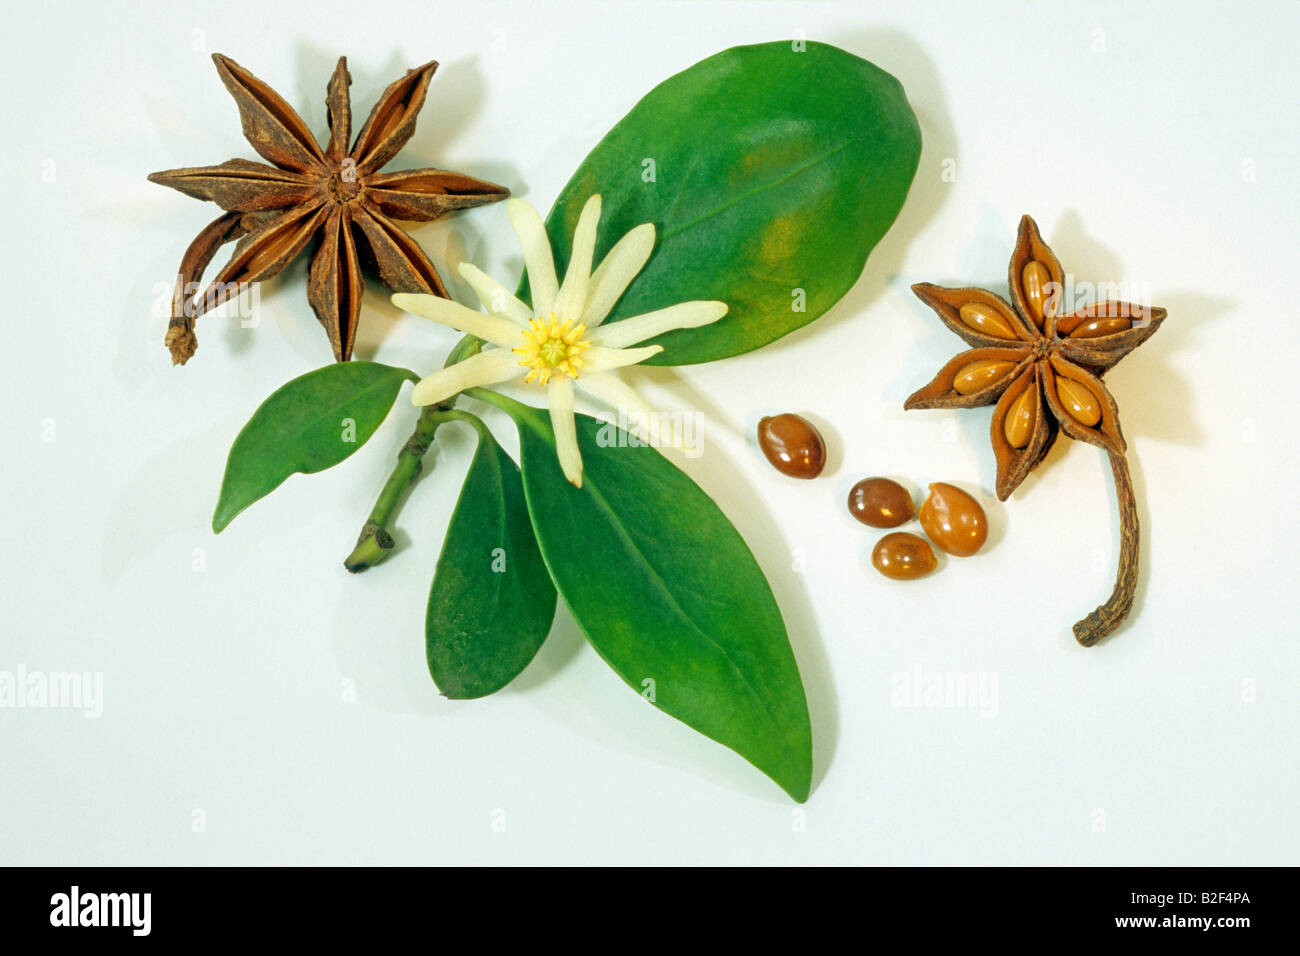 star anise plant